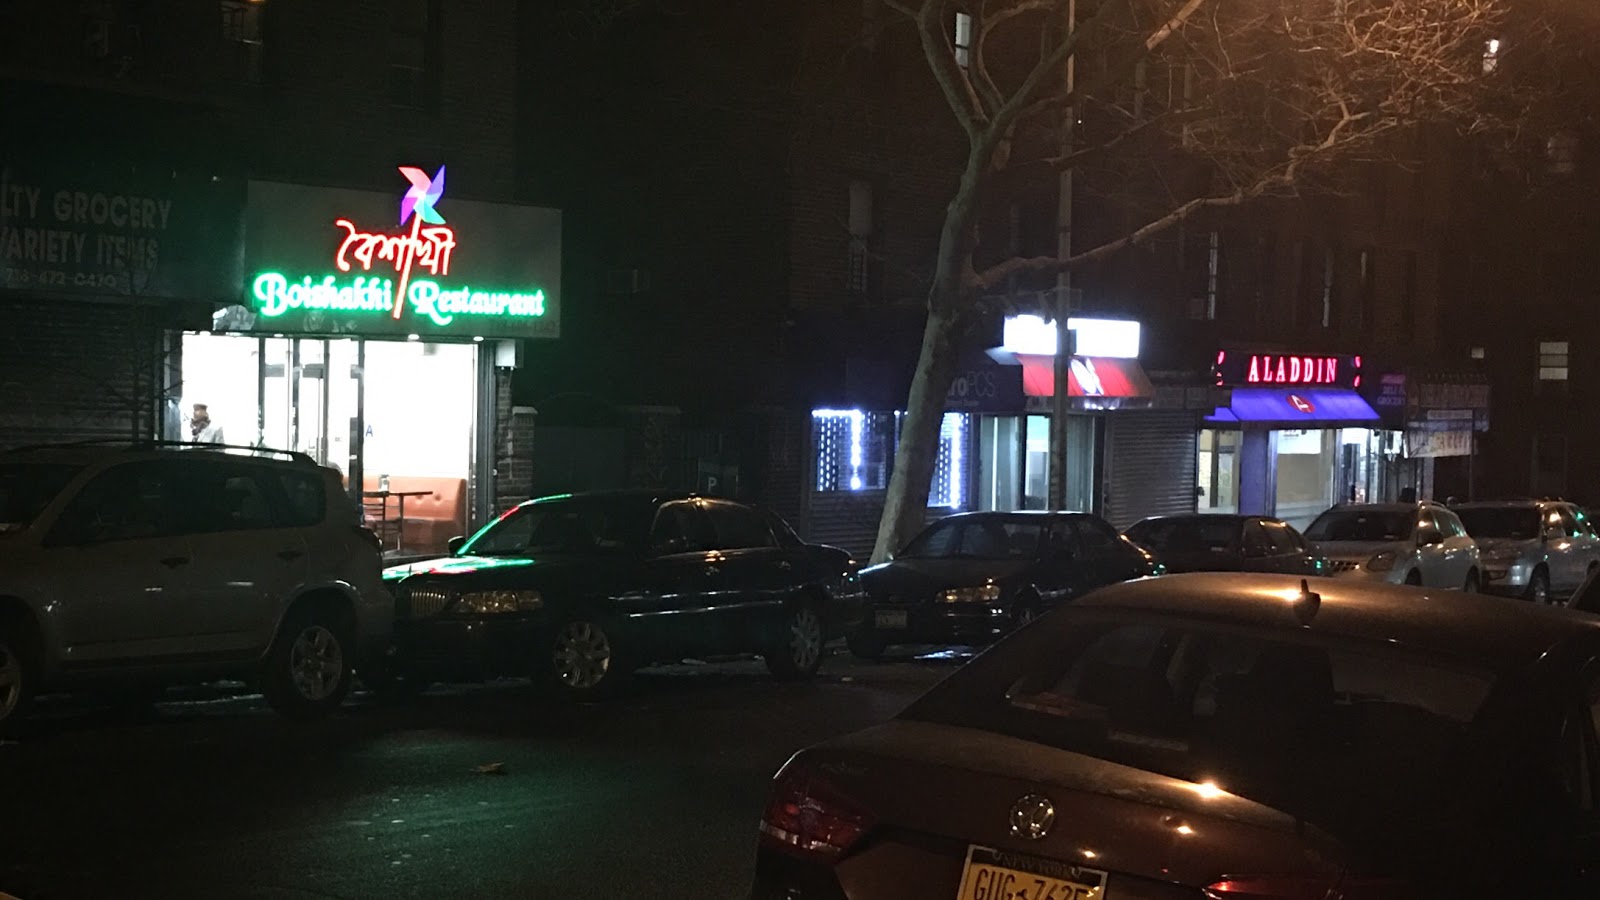 Photo of Boishakhi Restaurant in Queens City, New York, United States - 9 Picture of Restaurant, Food, Point of interest, Establishment